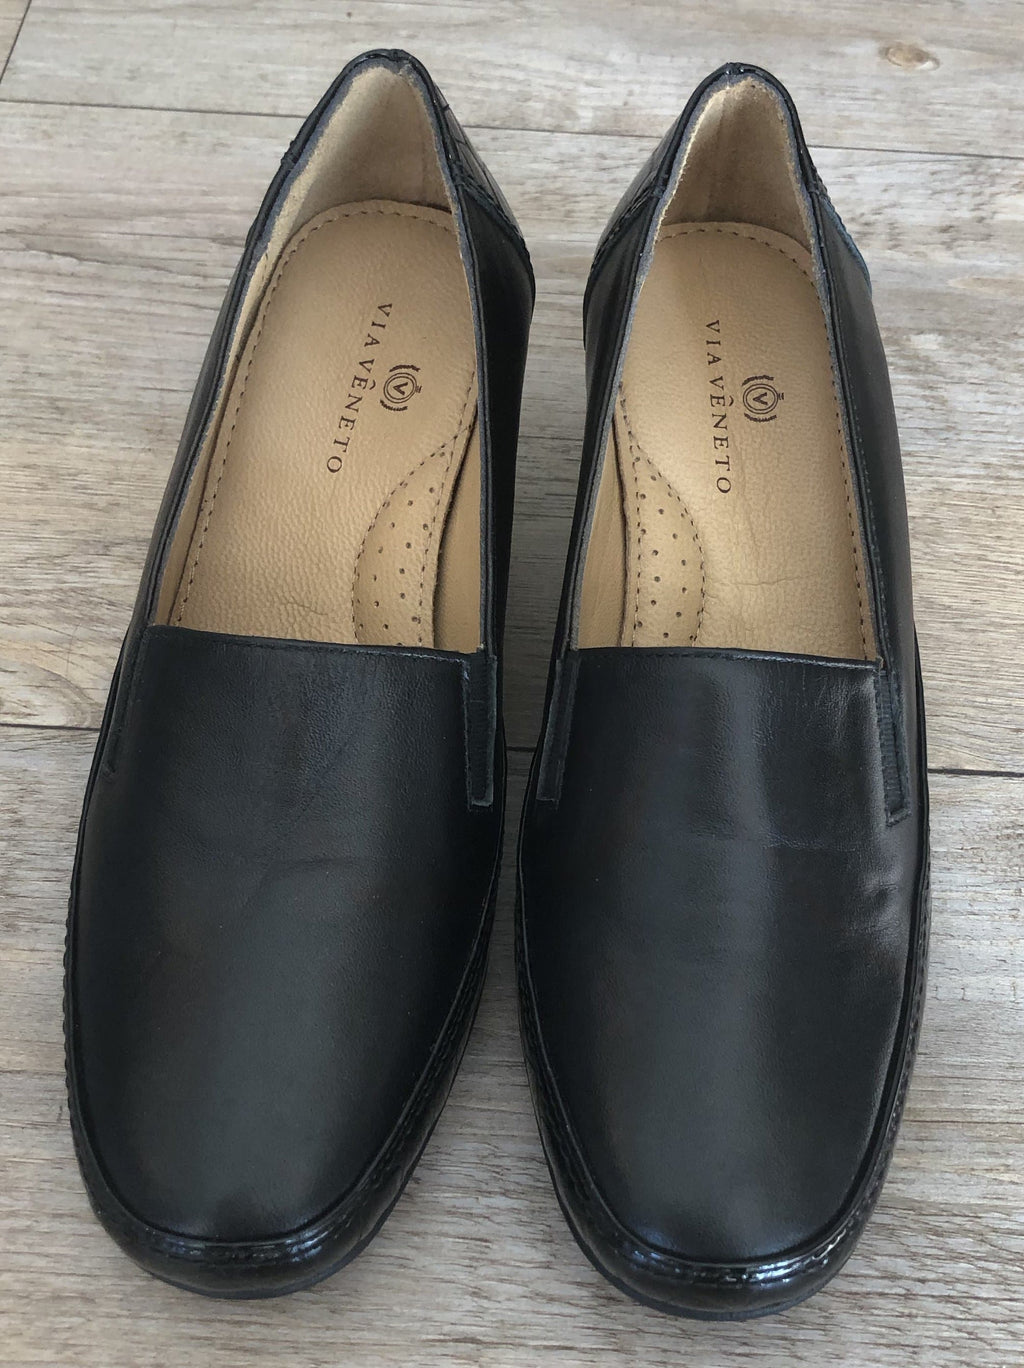 Via Veneto – My Shoe Shop